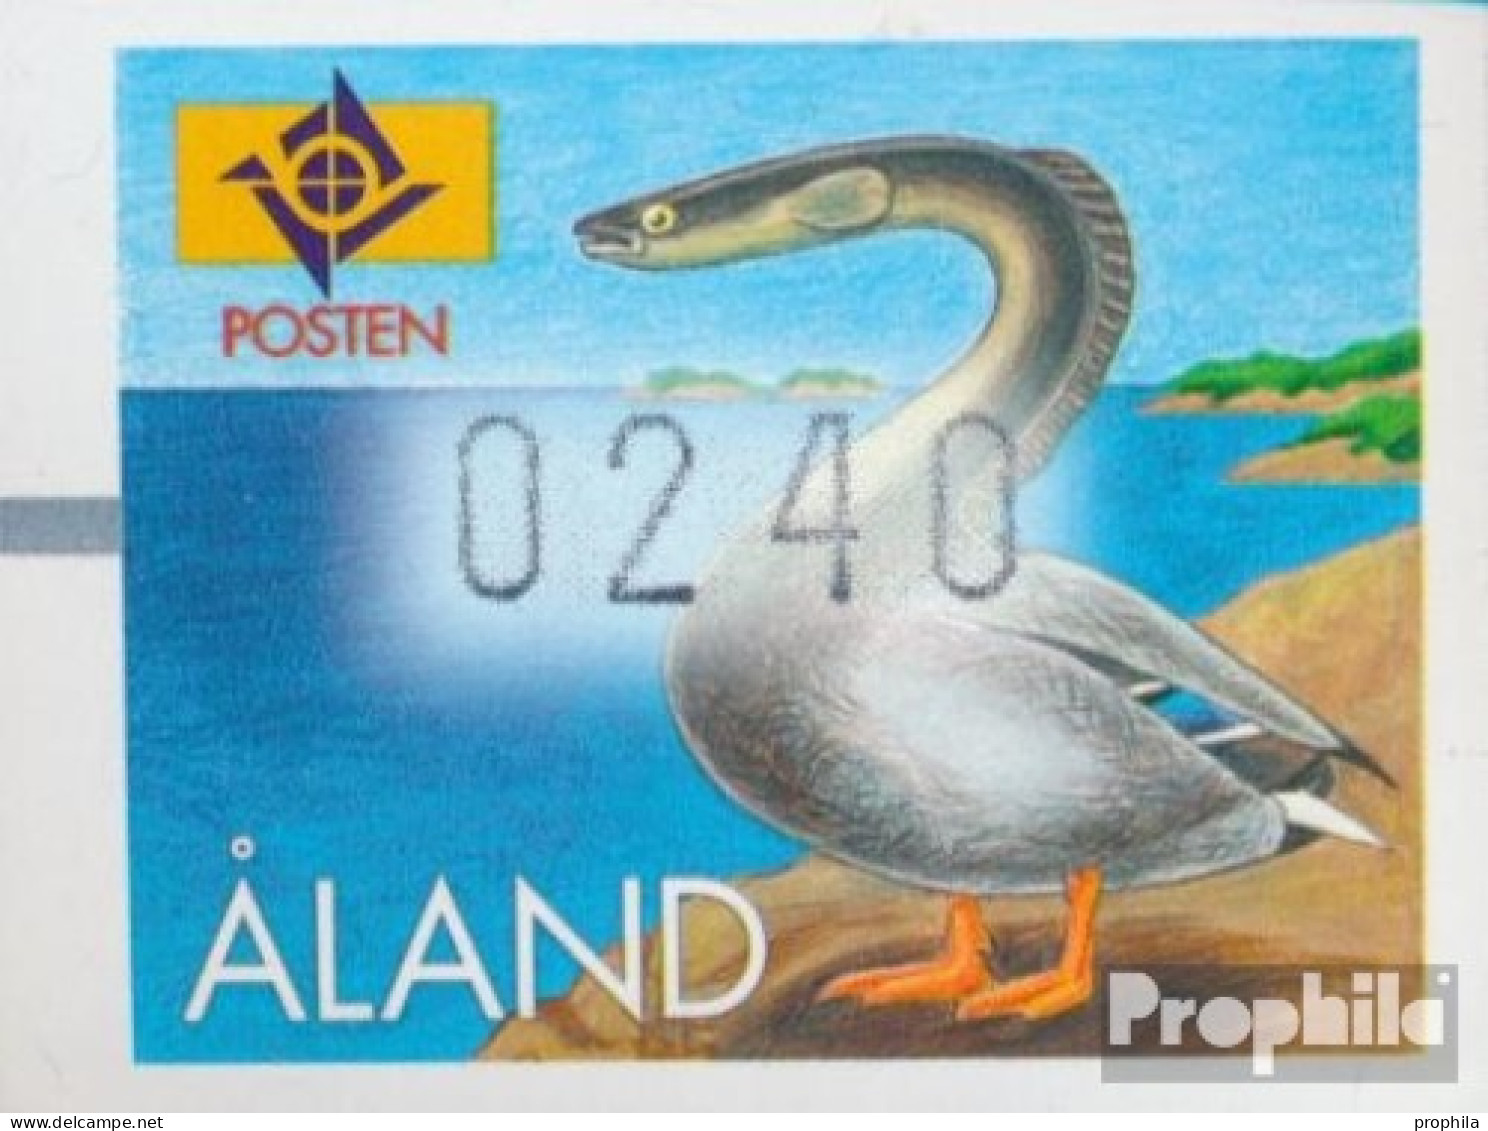 Finnland - Aland ATM7, 2.40 Nominale Postfrisch 1996 Automatenmarke - Fabeltier - Aland